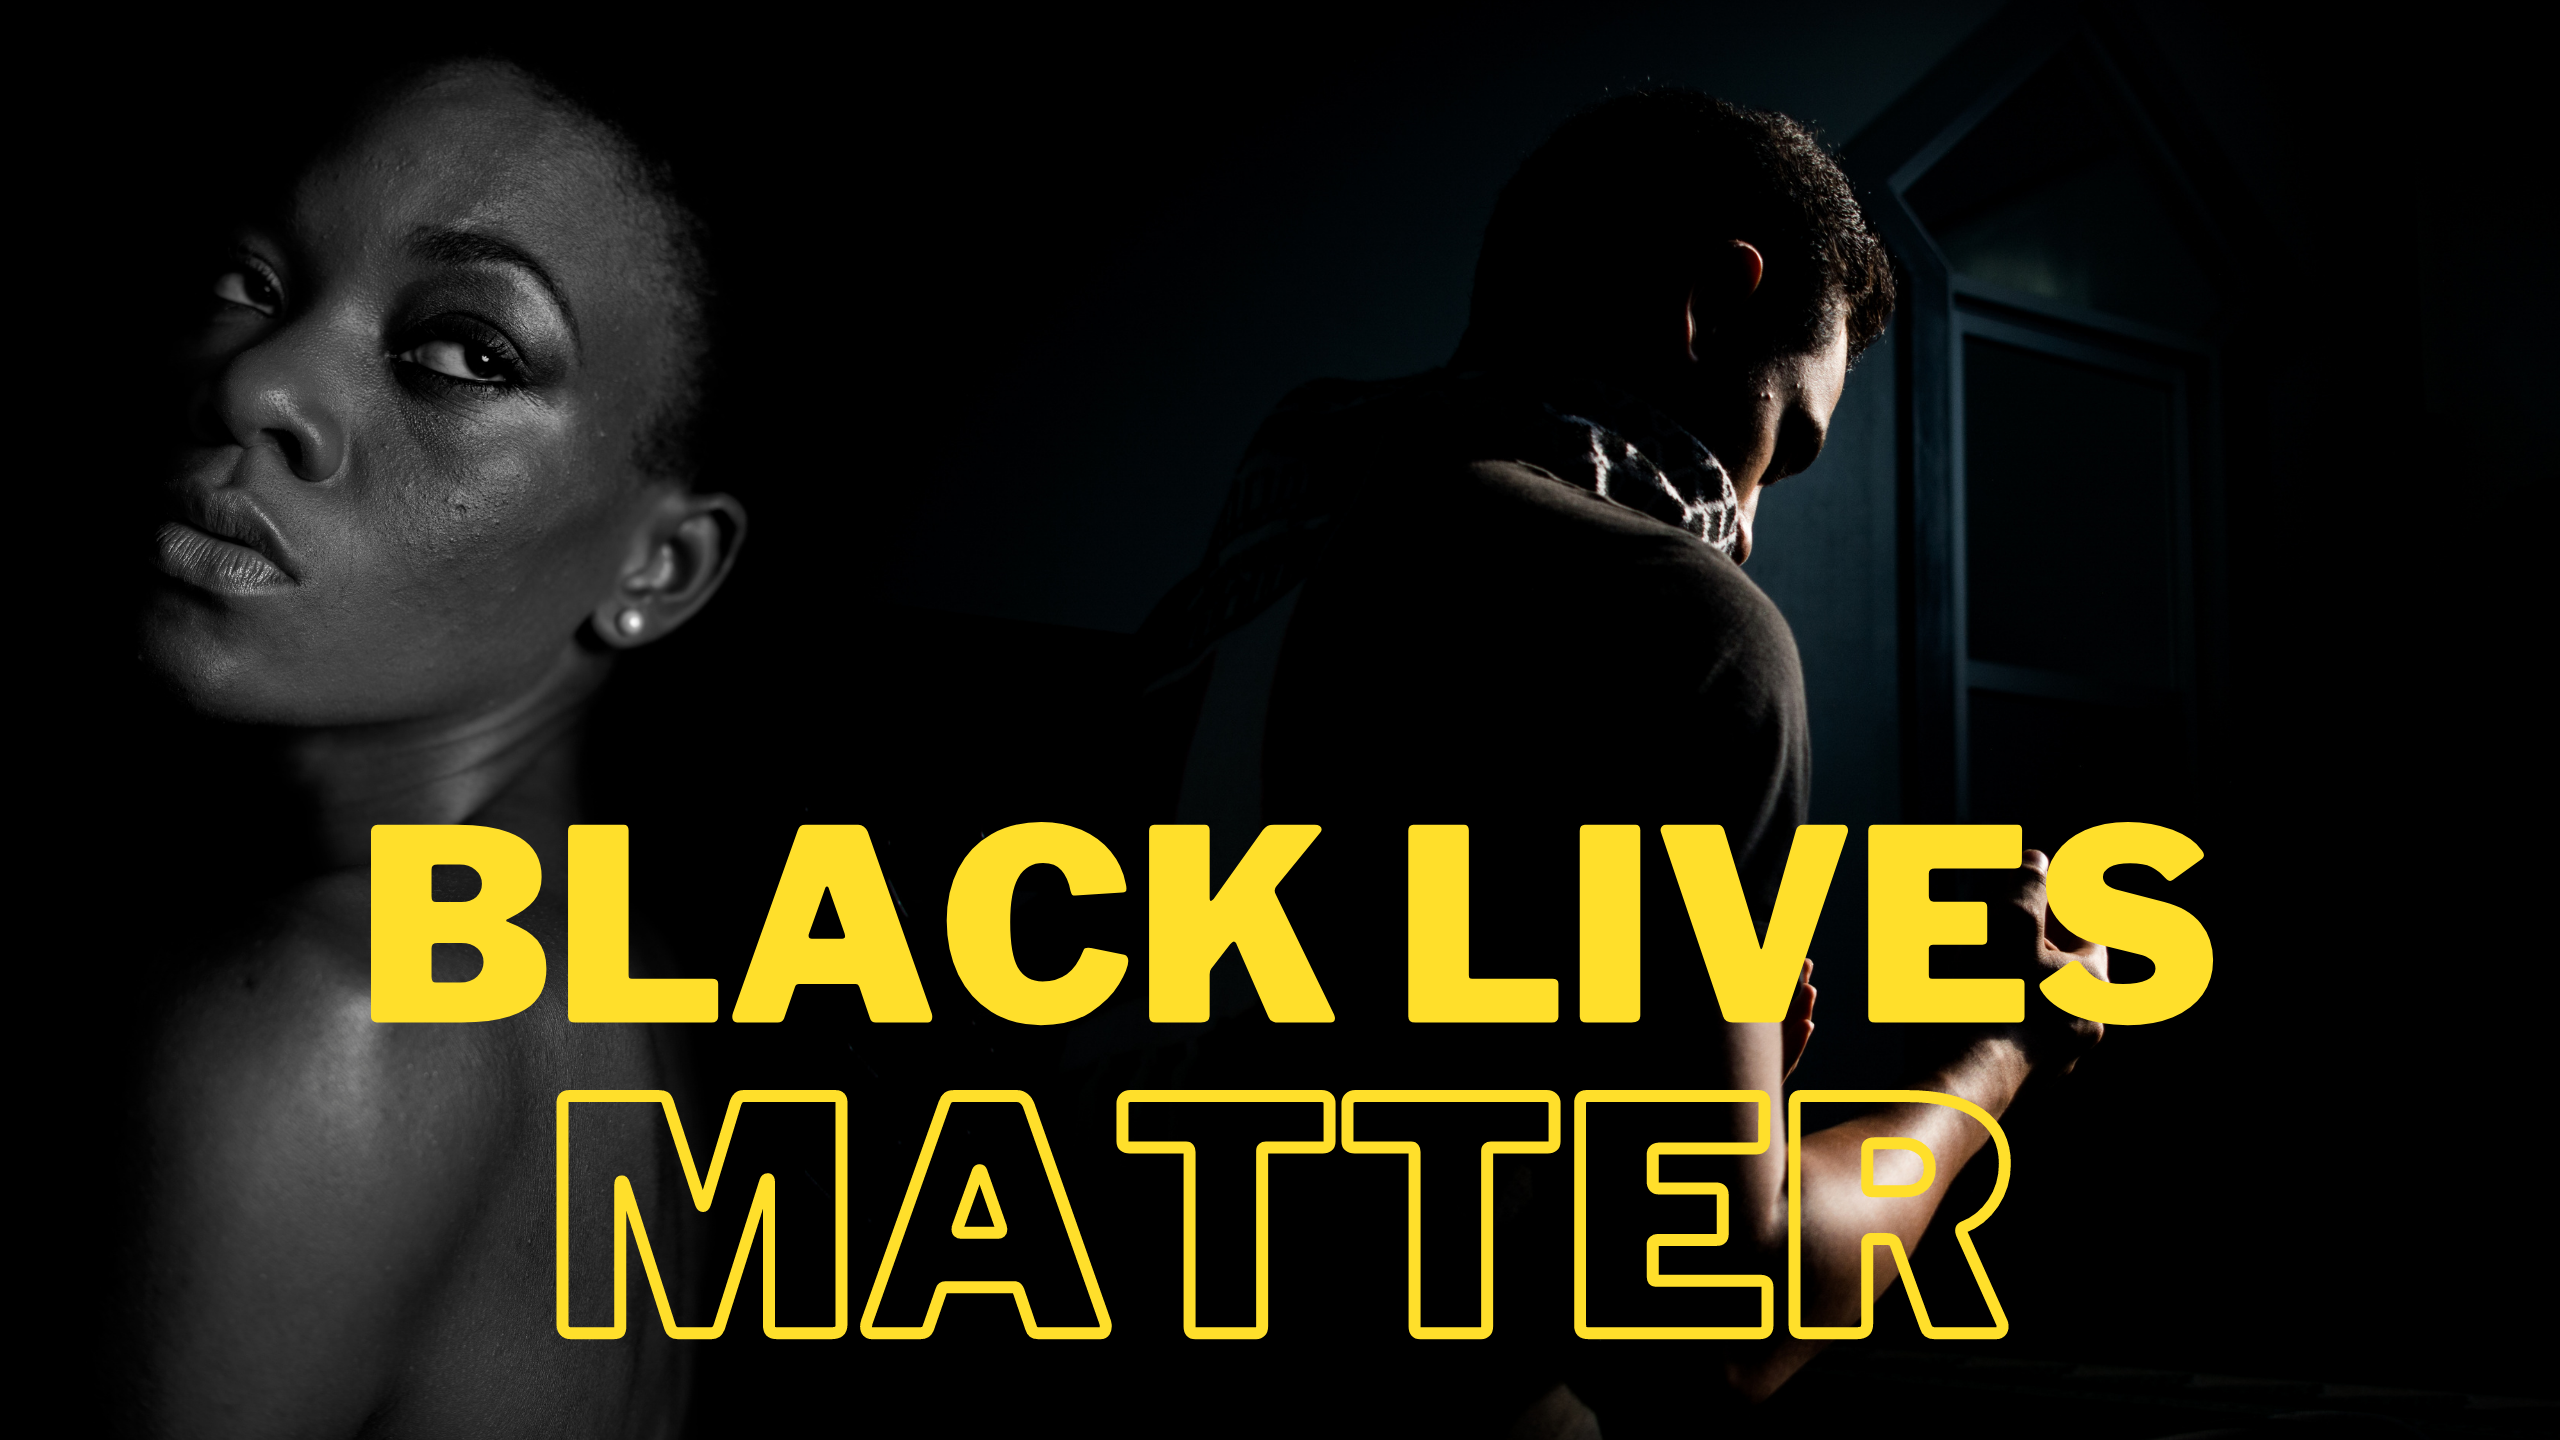 ANKORS supports black lives matter